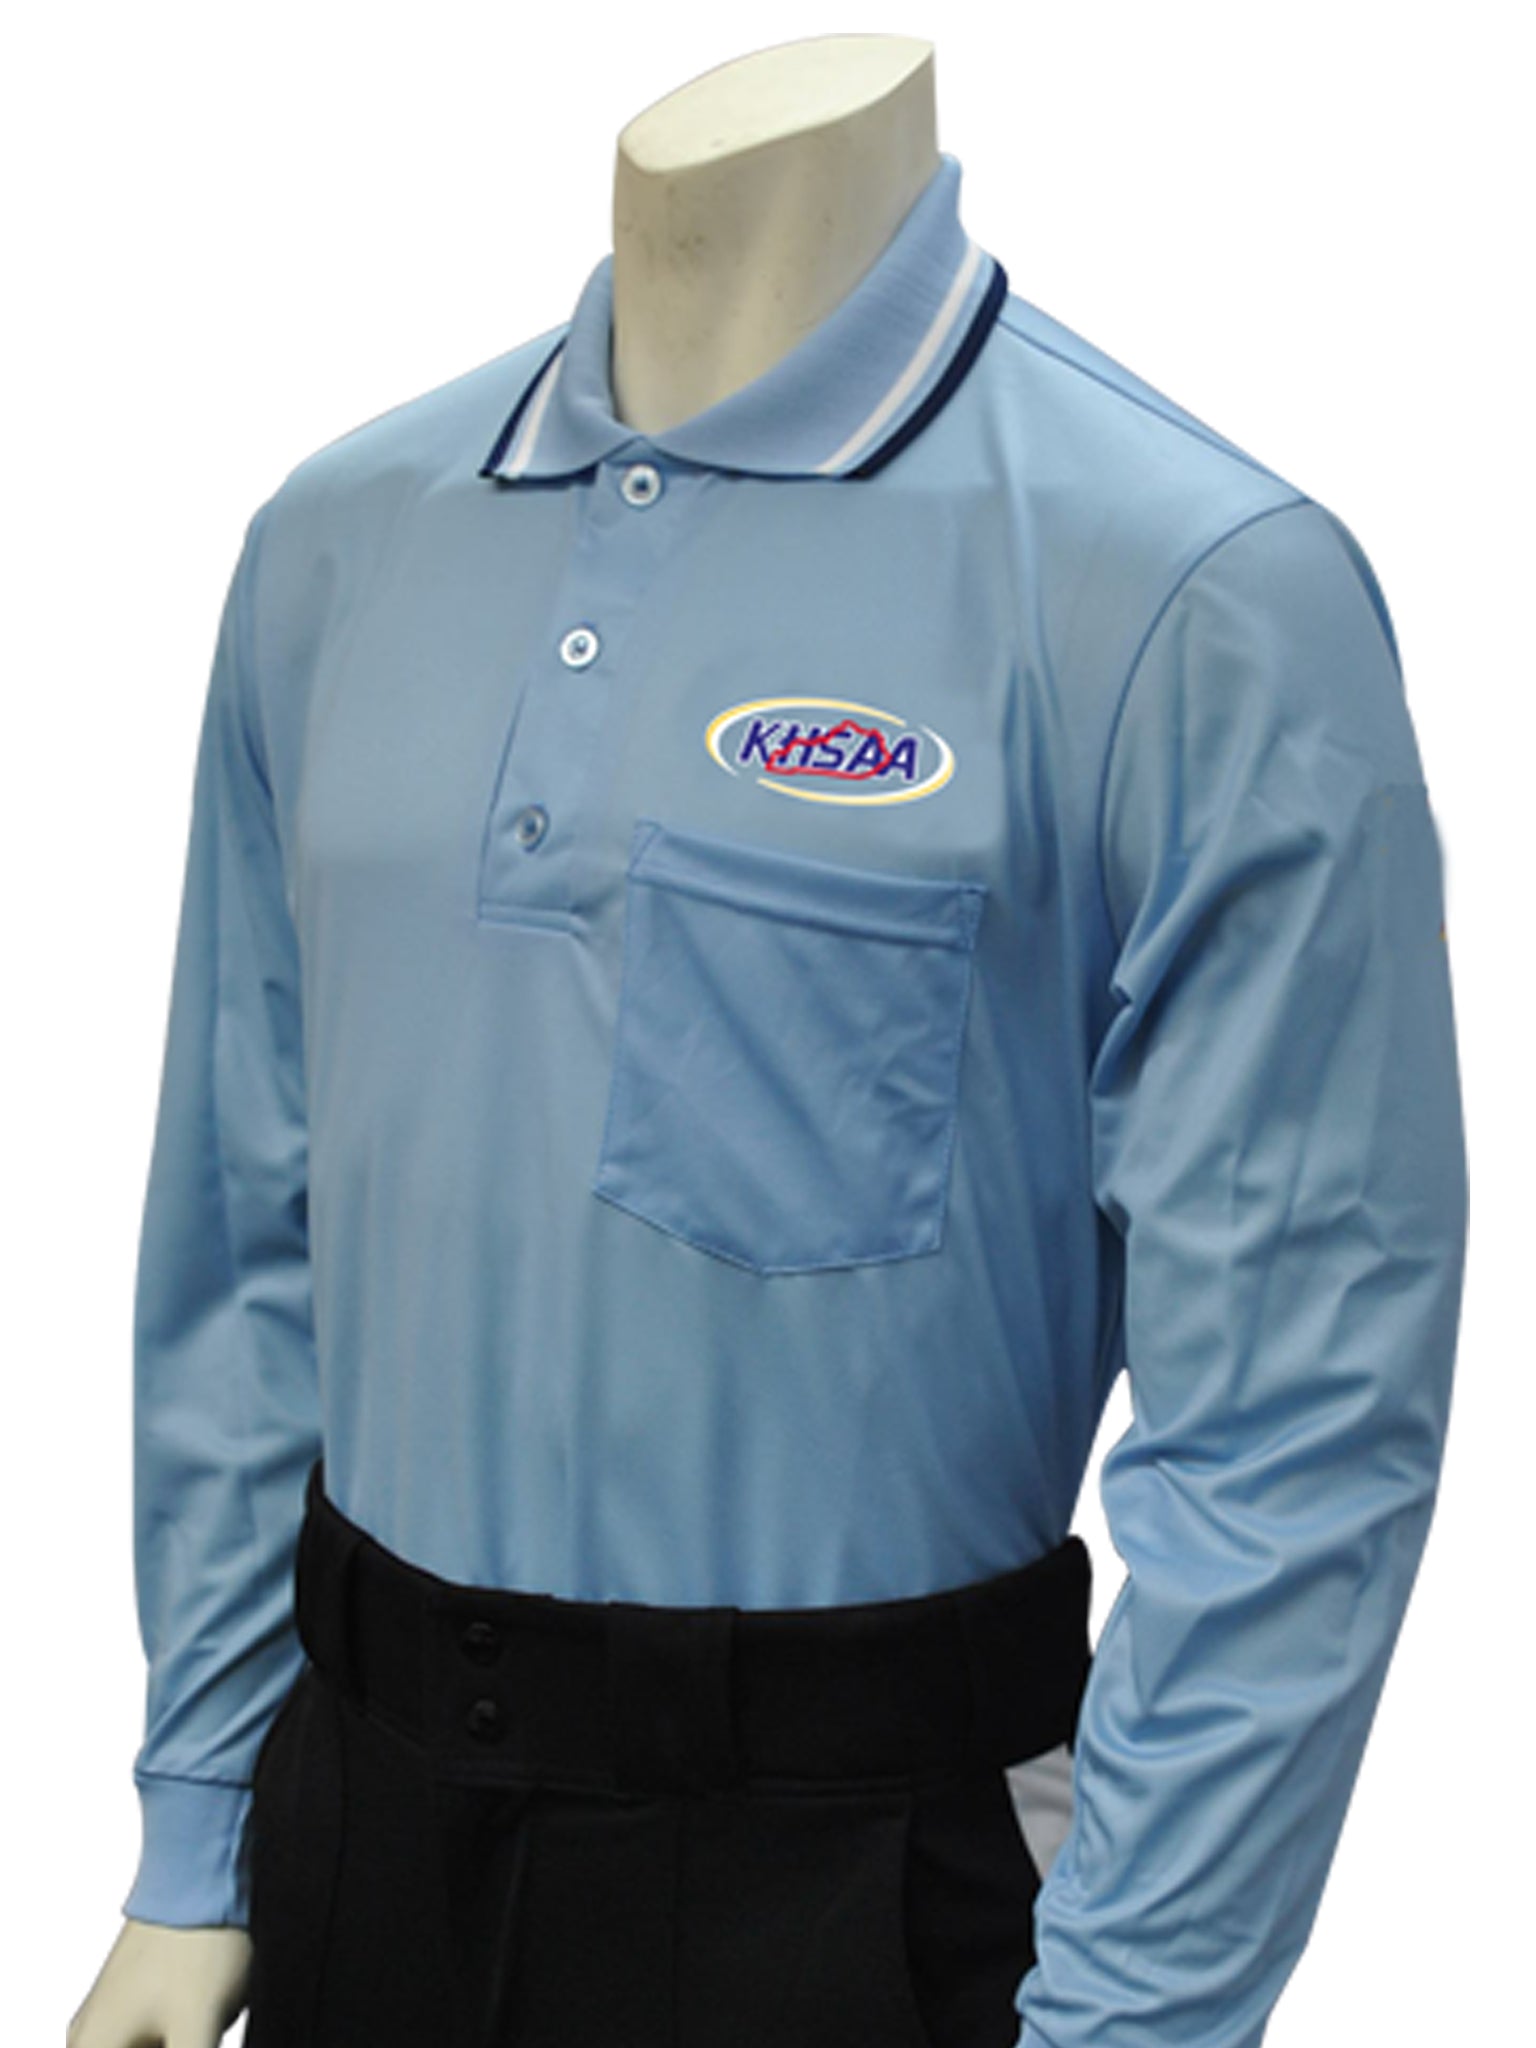 USA301KY - Smitty "Made in USA" - Baseball Men's Long Sleeve Shirt Powder Blue